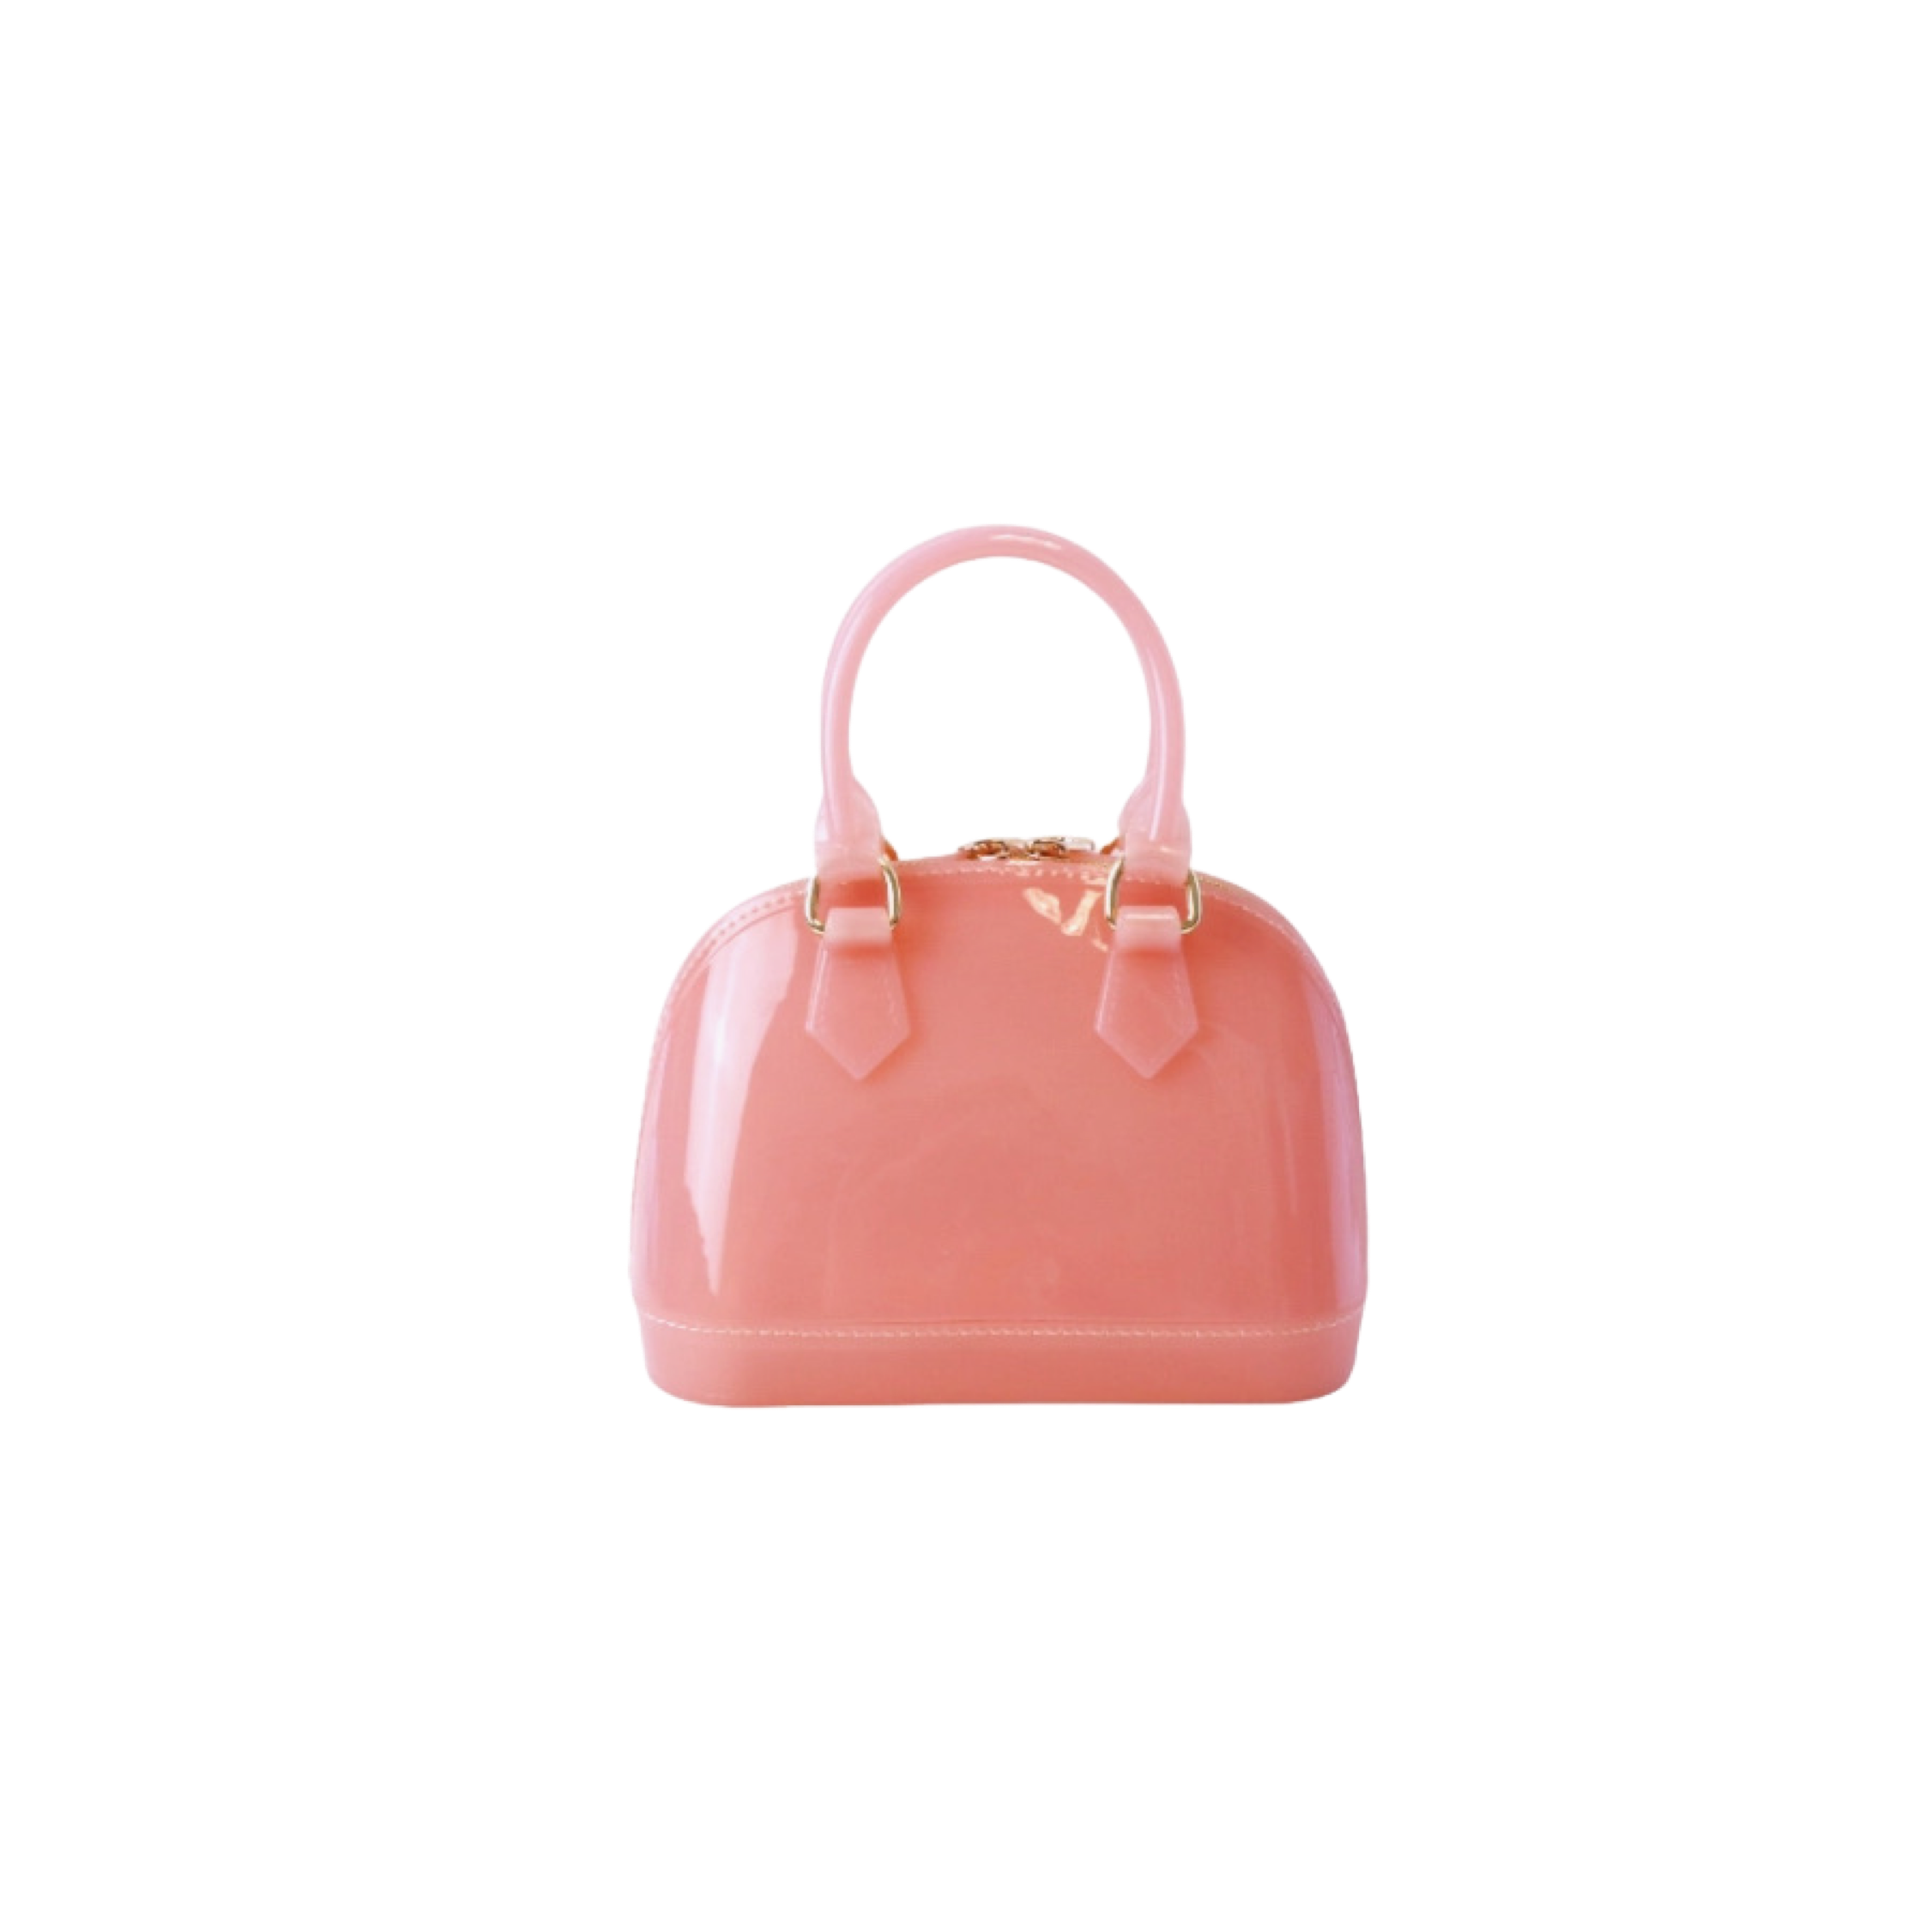 Jelly bag – Pink Vanilla